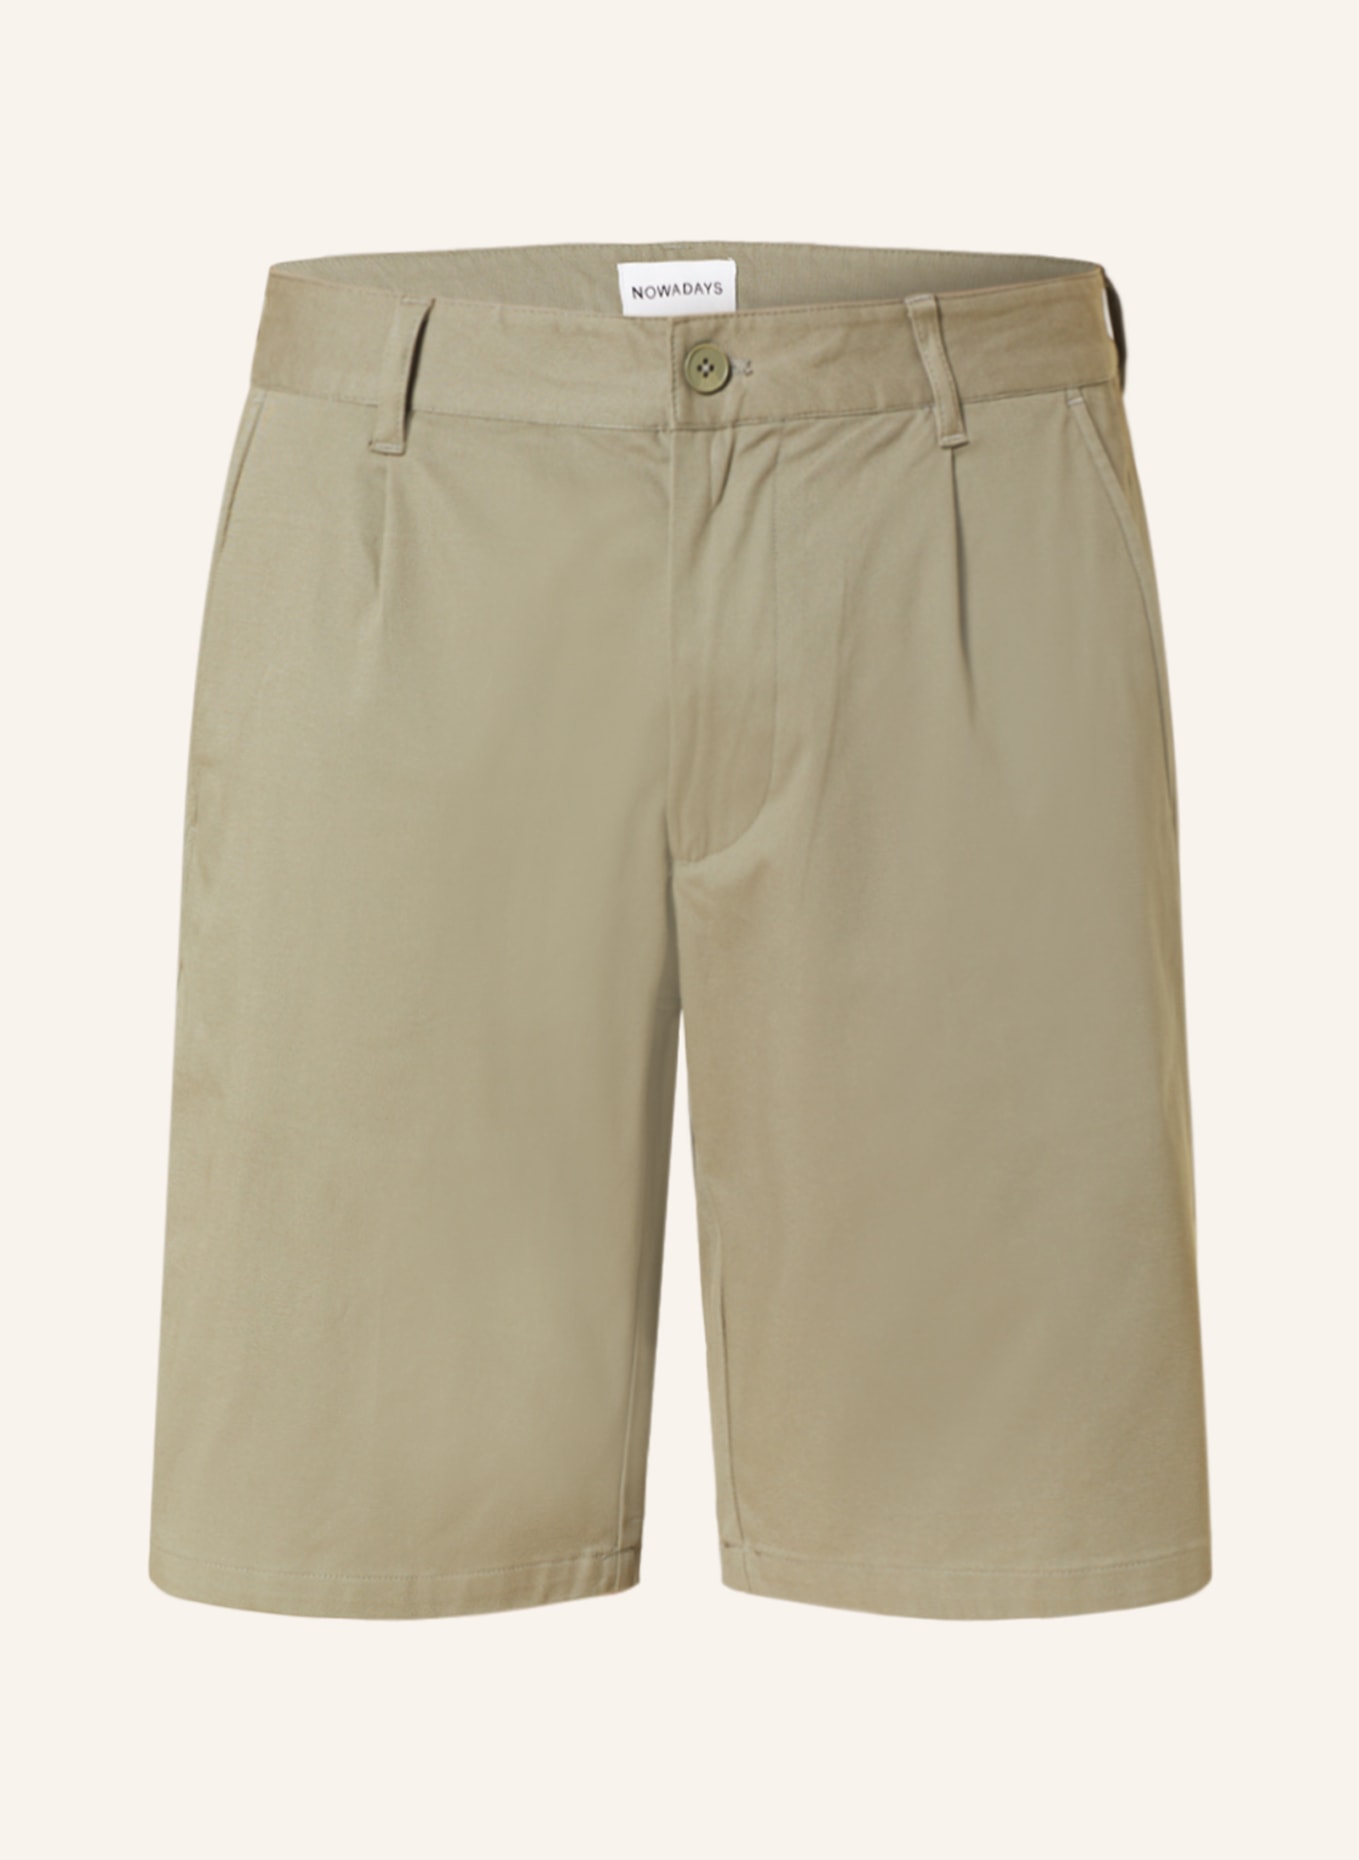 NOWADAYS Shorts Regular Fit, Farbe: OLIV (Bild 1)